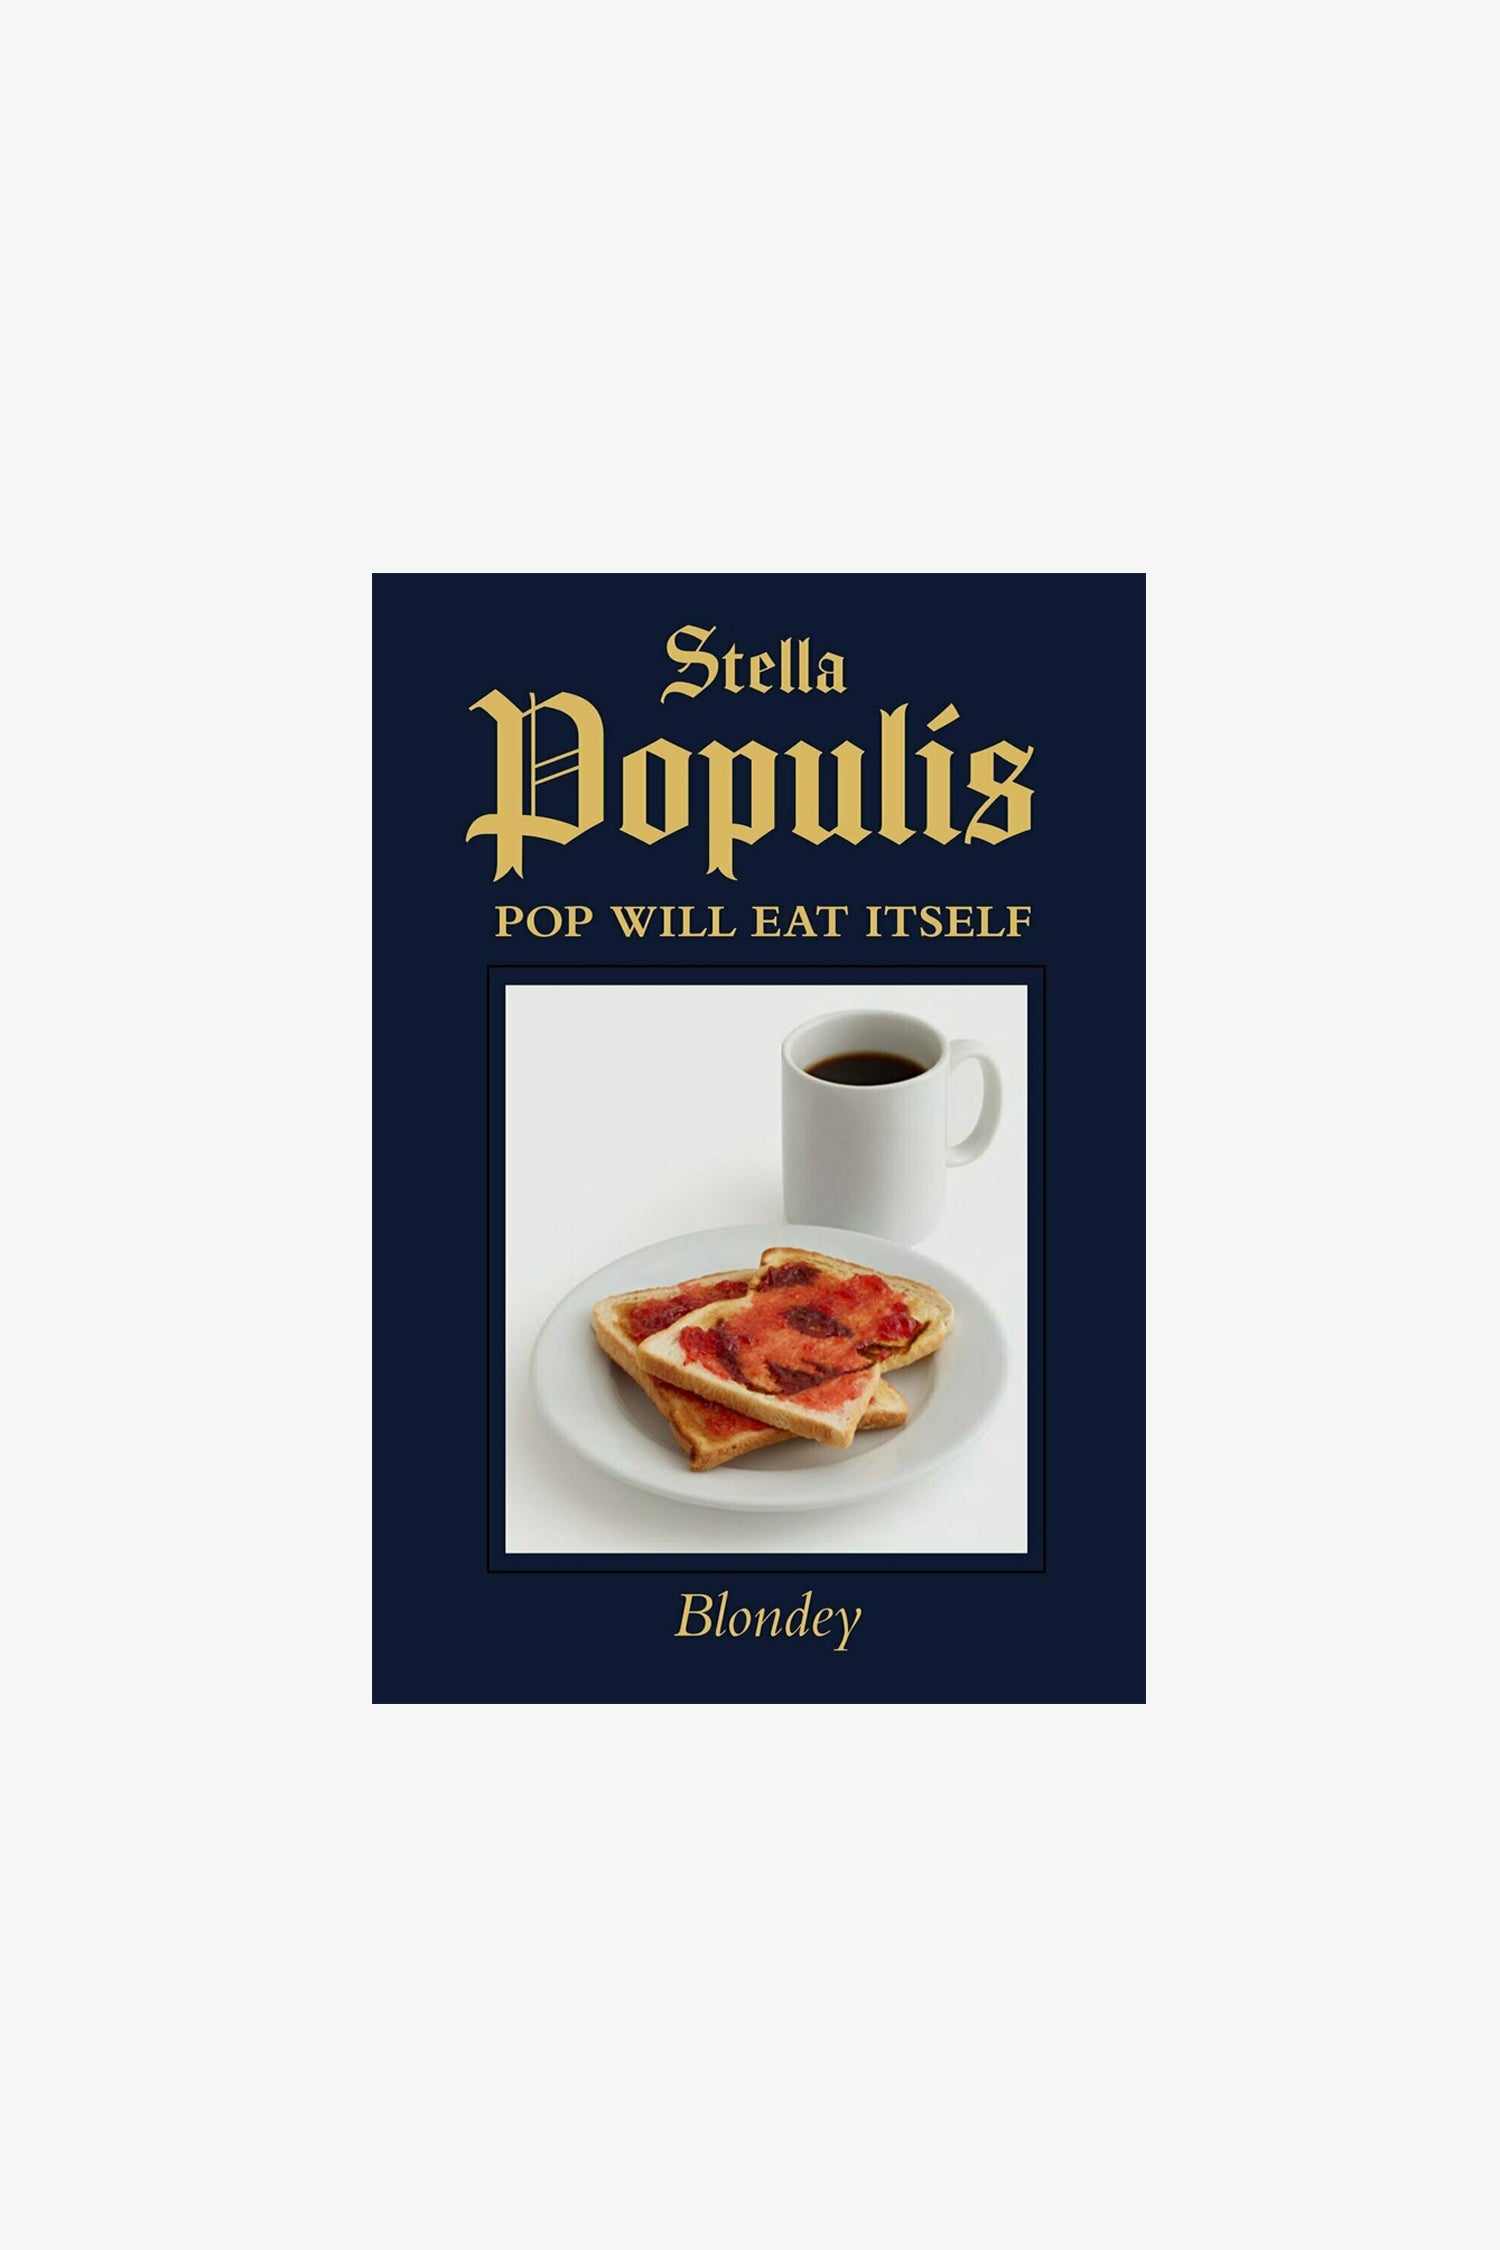 Selectshop FRAME - FRAME BOOK Blondey. Stella Populis.: "Pop Will Eat Itself" Book Dubai